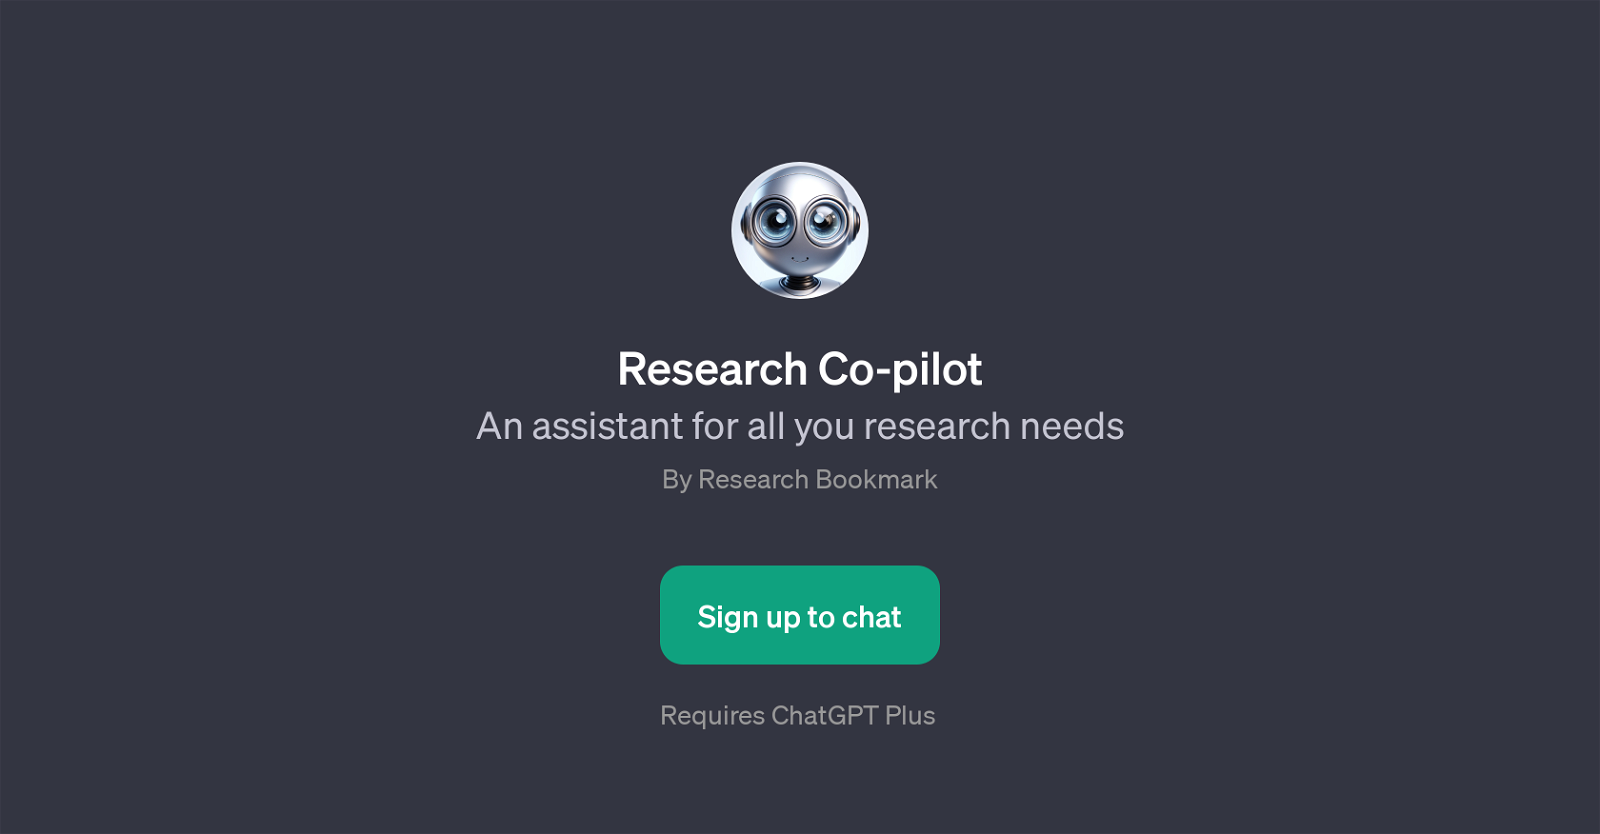 Research Co-pilot website